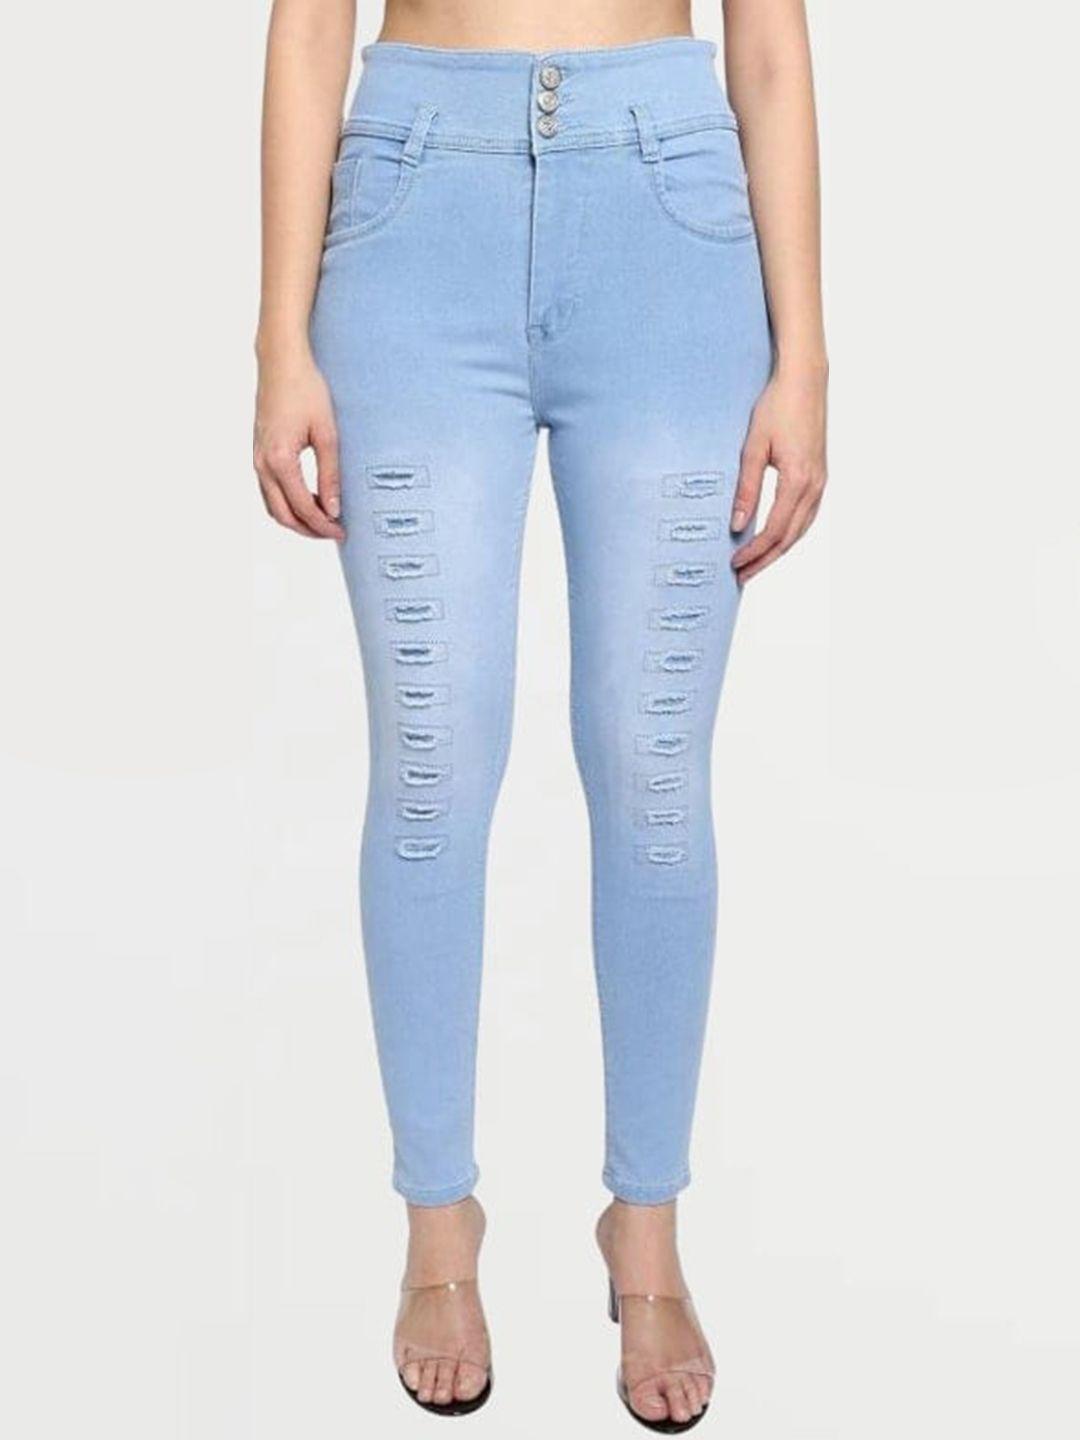 baesd women jean slim fit mildly distressed stretchable denim jeans